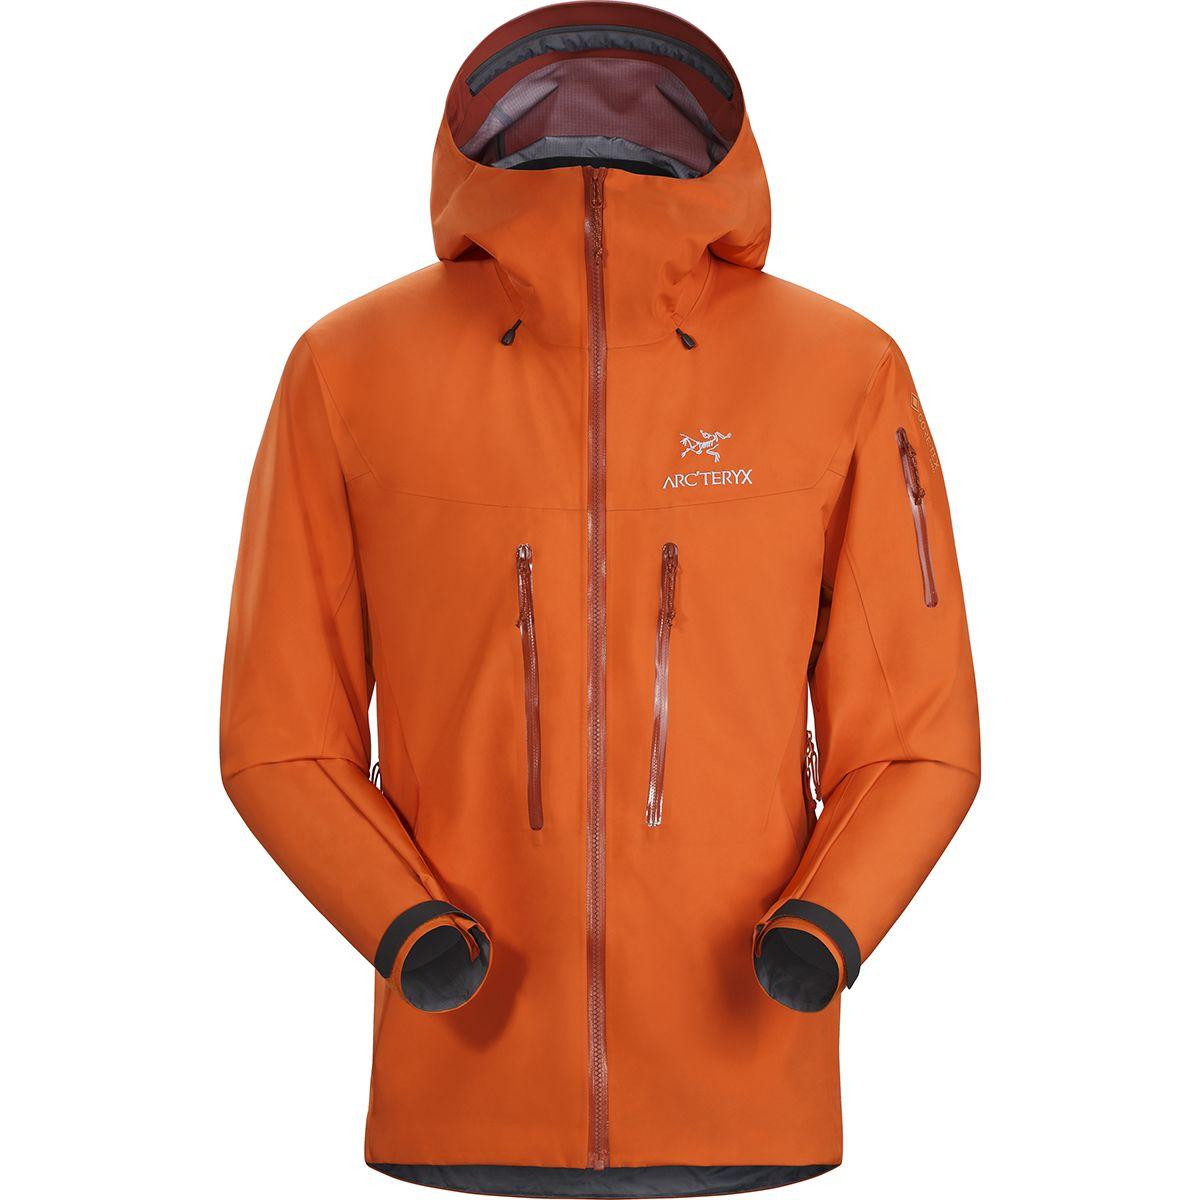 Arc'teryx Synthetic Alpha Sv Jacket in Orange for Men - Lyst